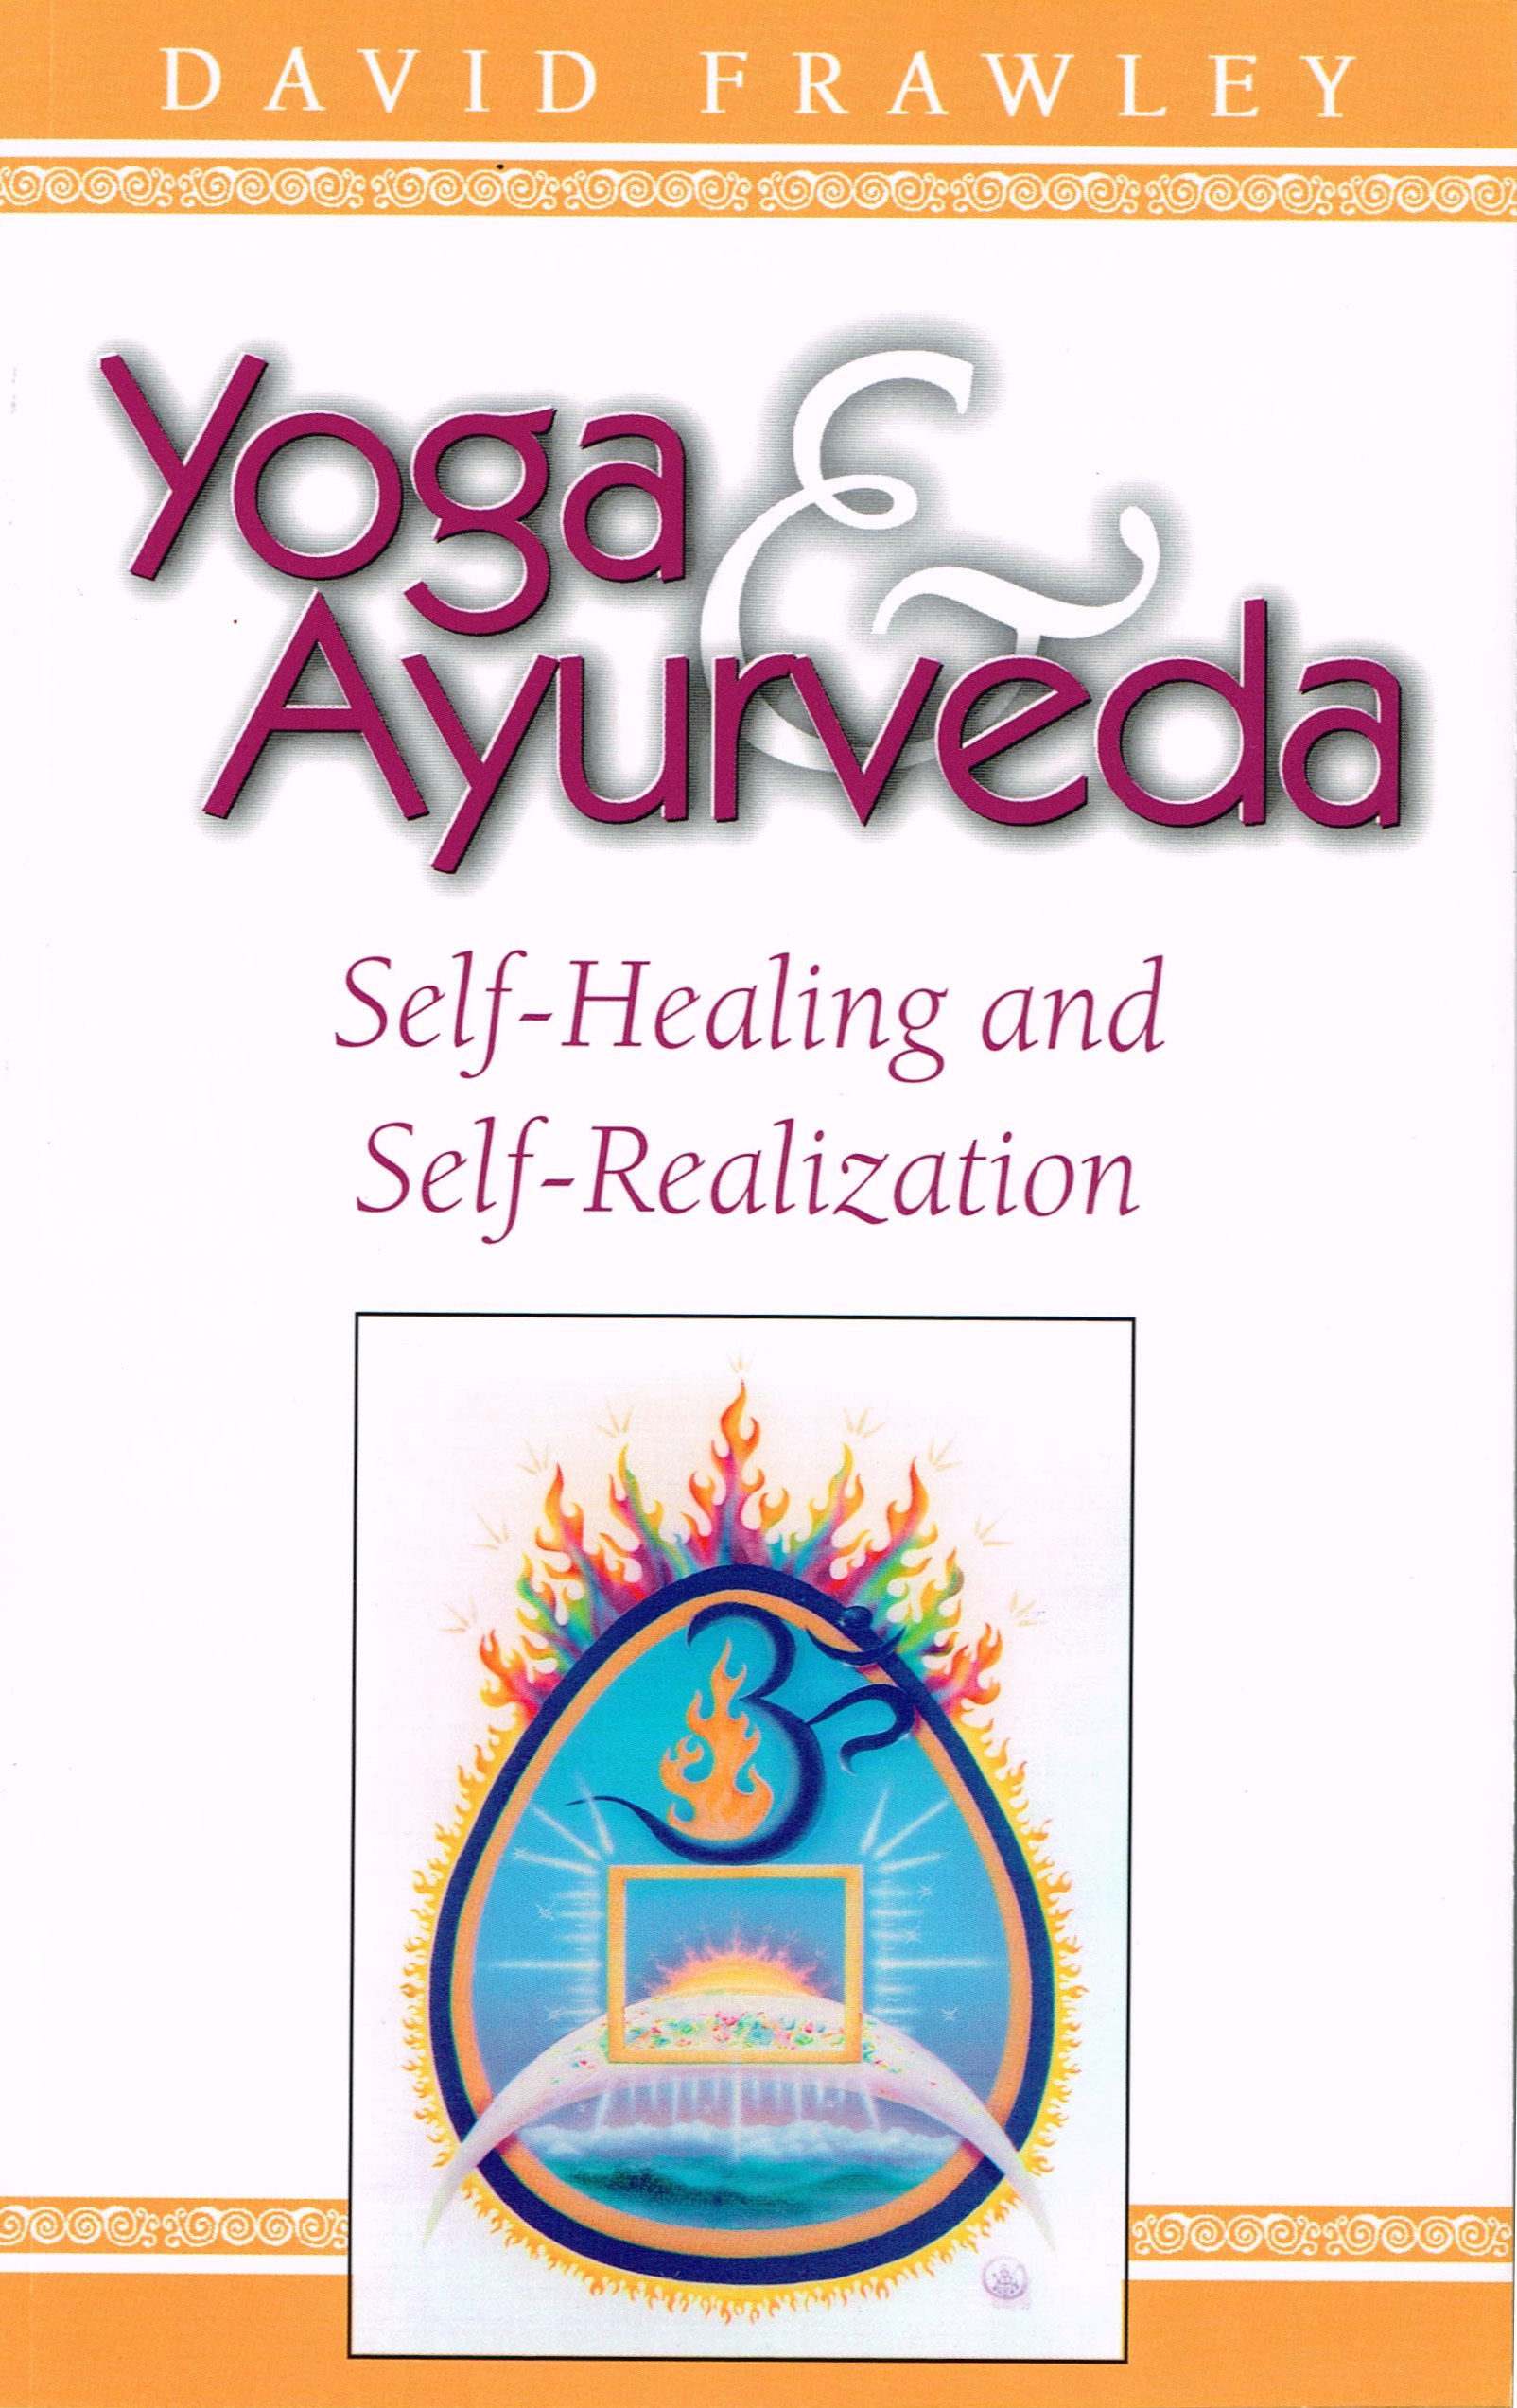 A photo of Yoga & Ayurveda